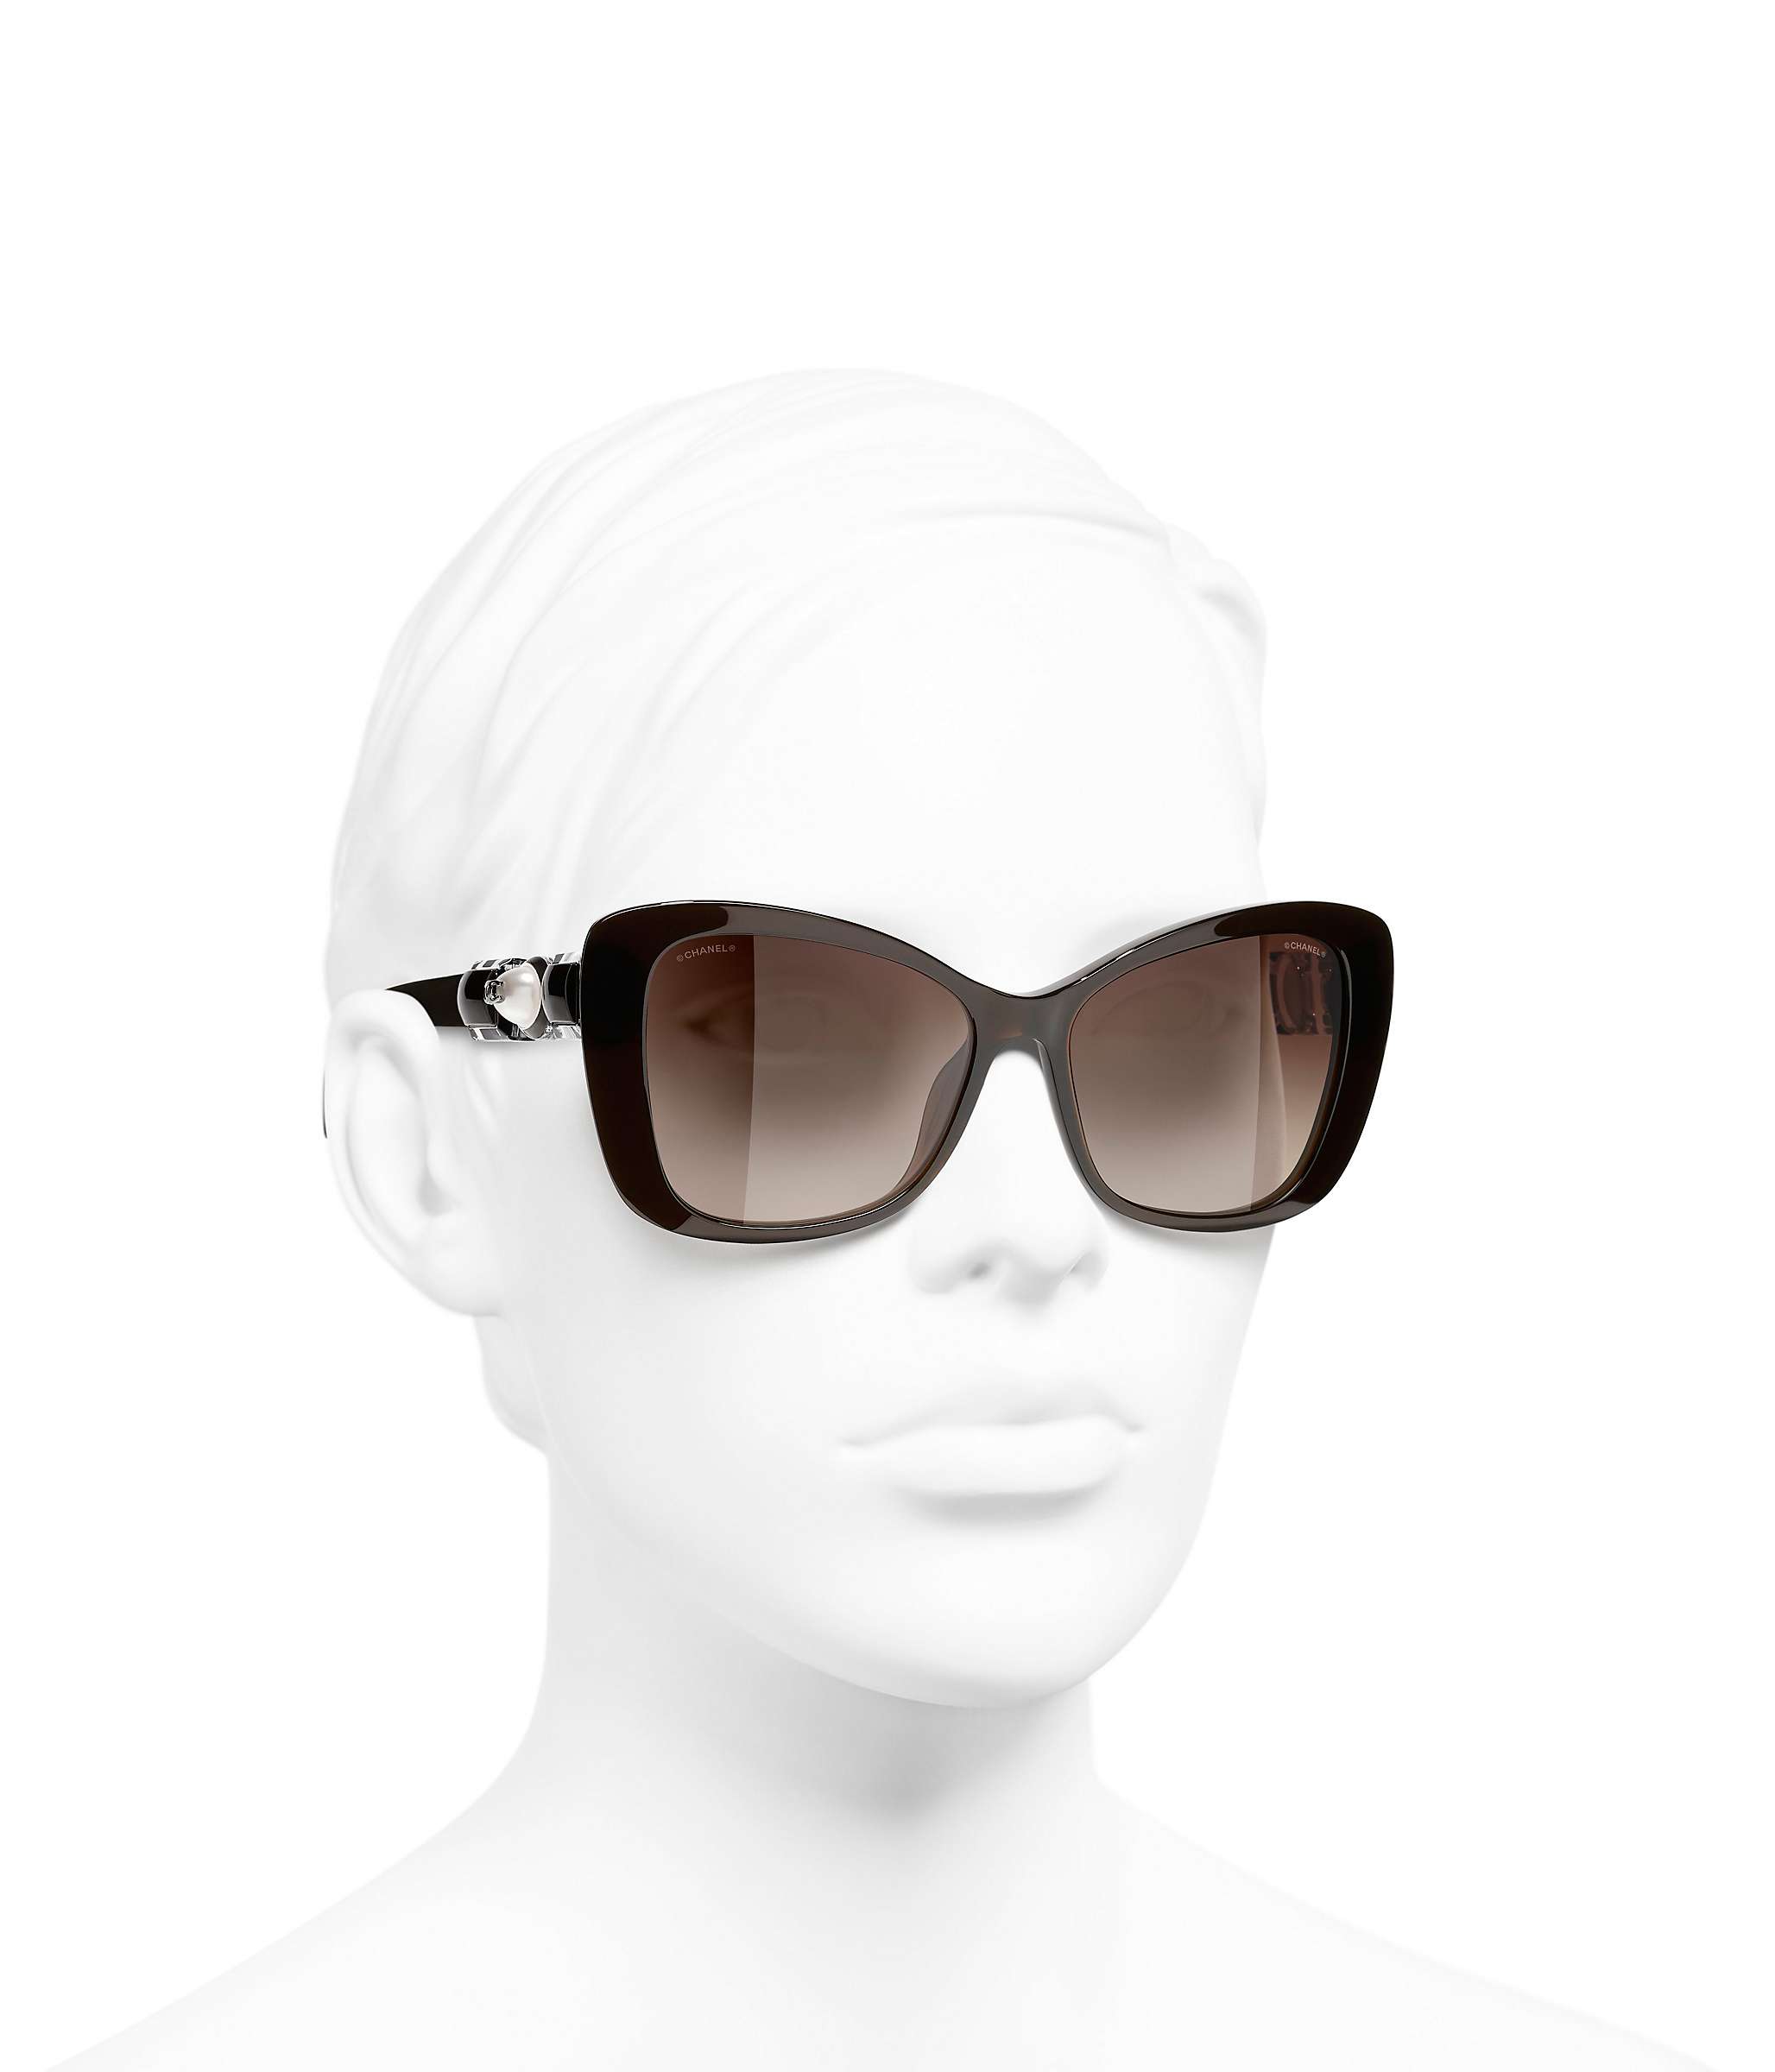 Buy CHANEL Cat Eye Sunglasses CH5445H Black/Brown Gradient Online at johnlewis.com